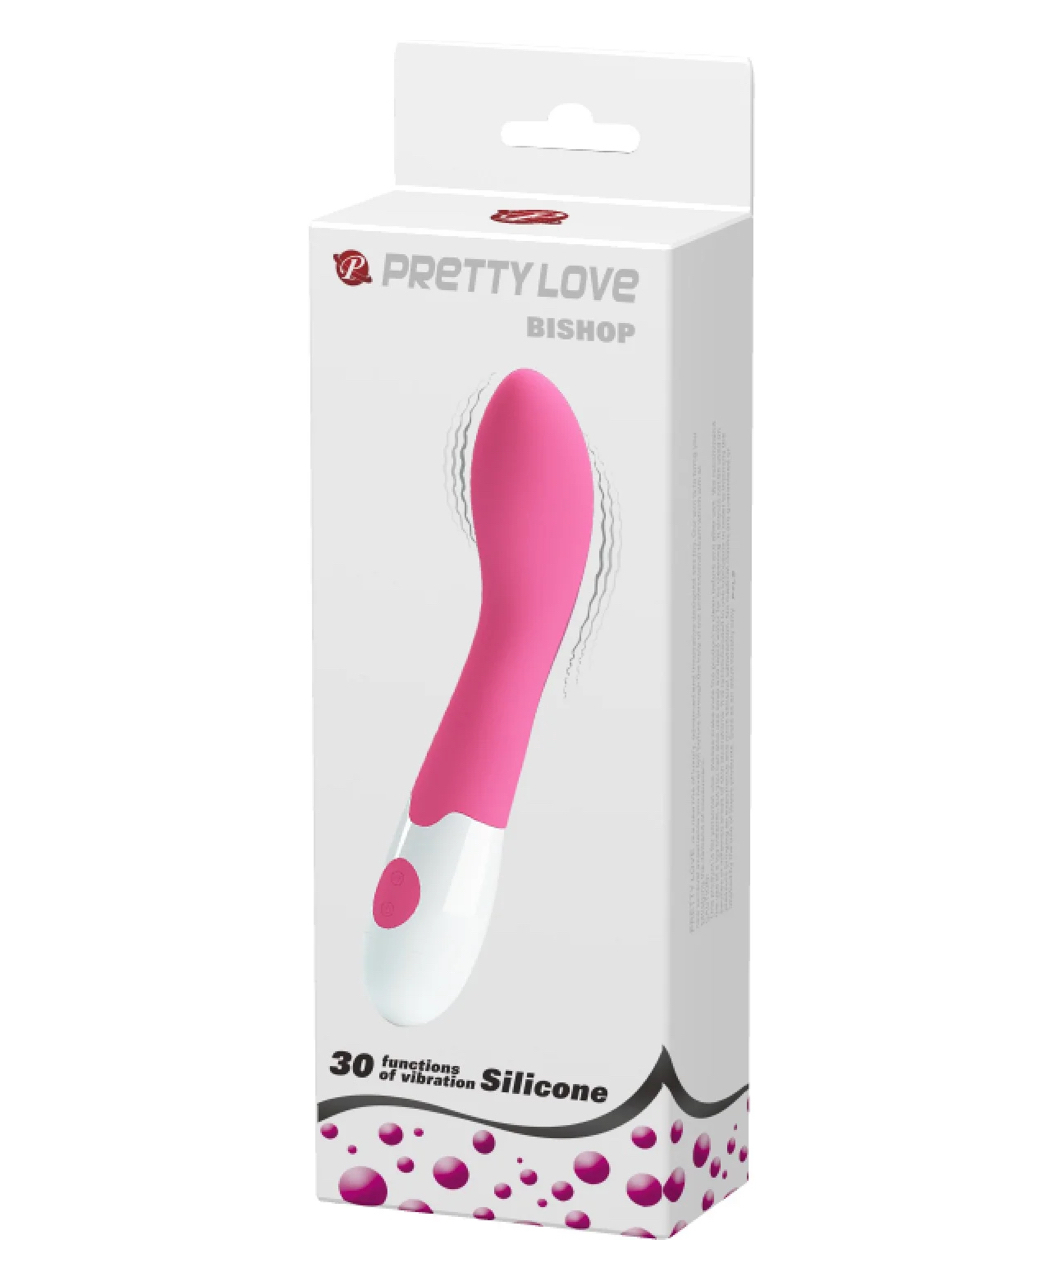 Pretty Love G-Spot 30 Mode vibrators